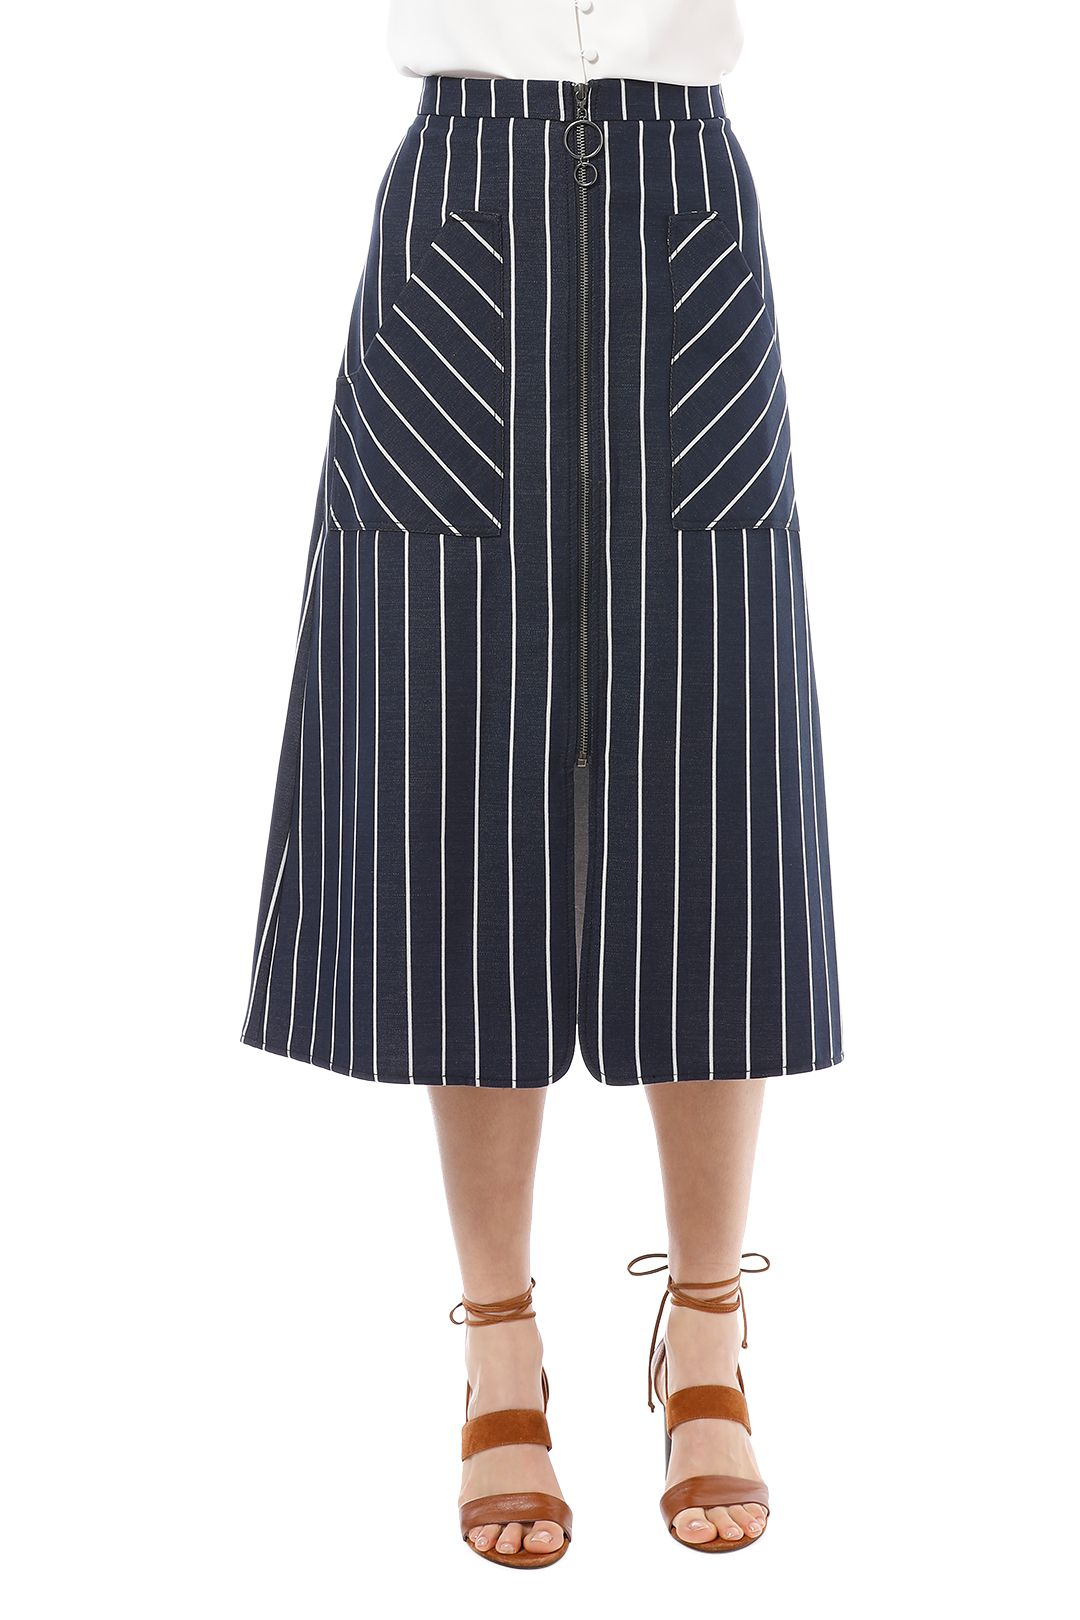 Veronika Maine - Textured Stripe Zip Skirt - Navy - Close Up